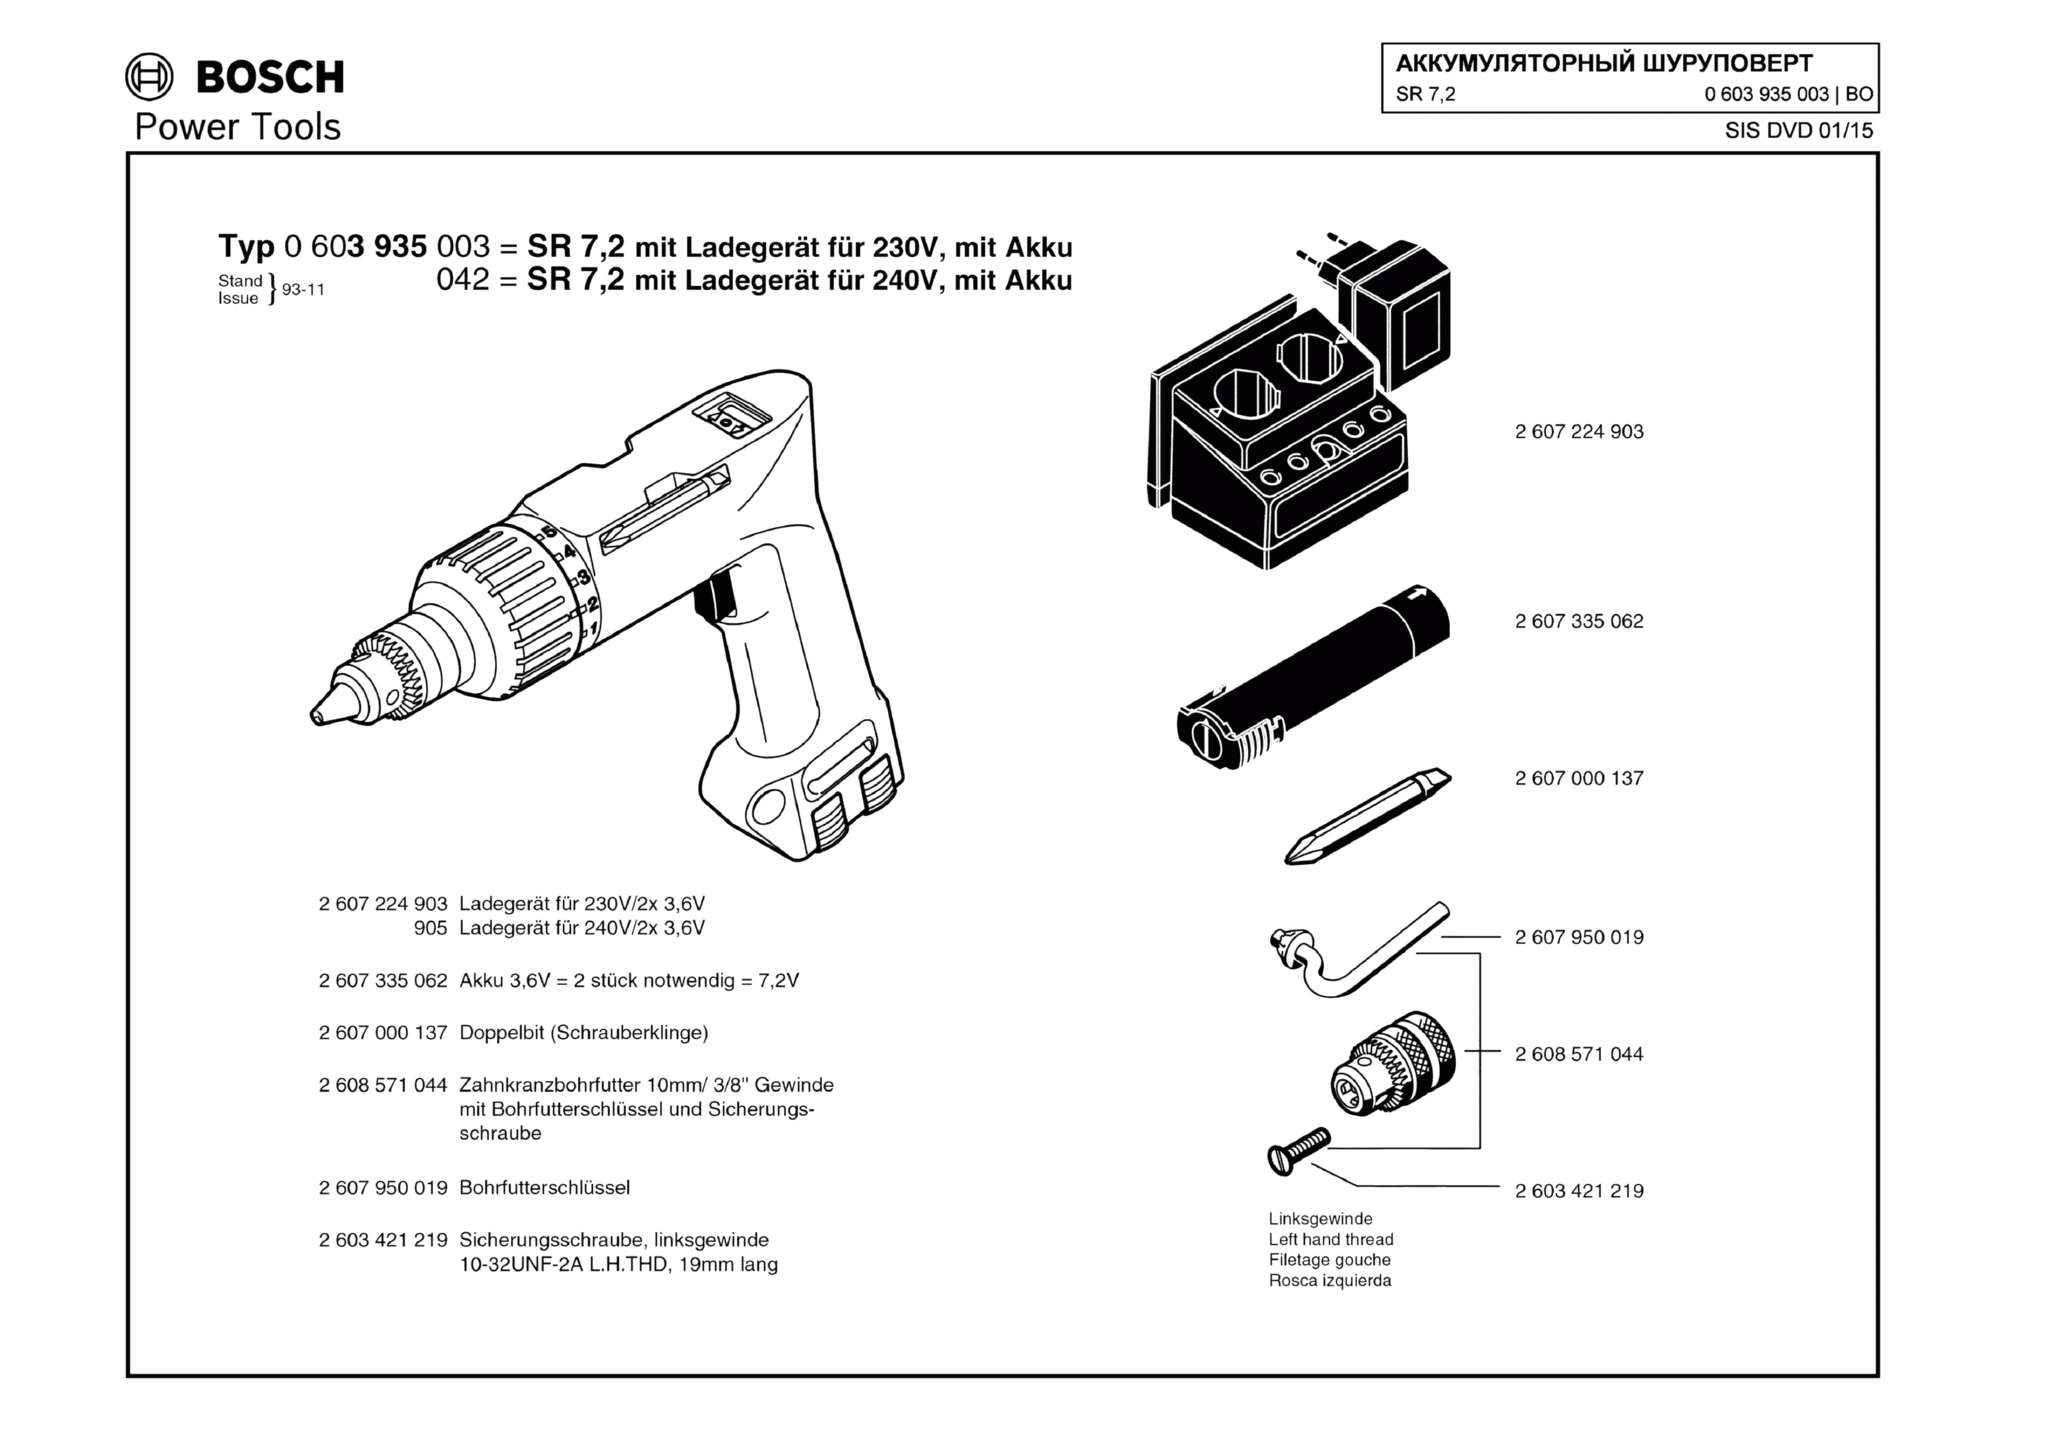 Запчасти, схема и деталировка Bosch SR 7,2 (ТИП 0603935003)